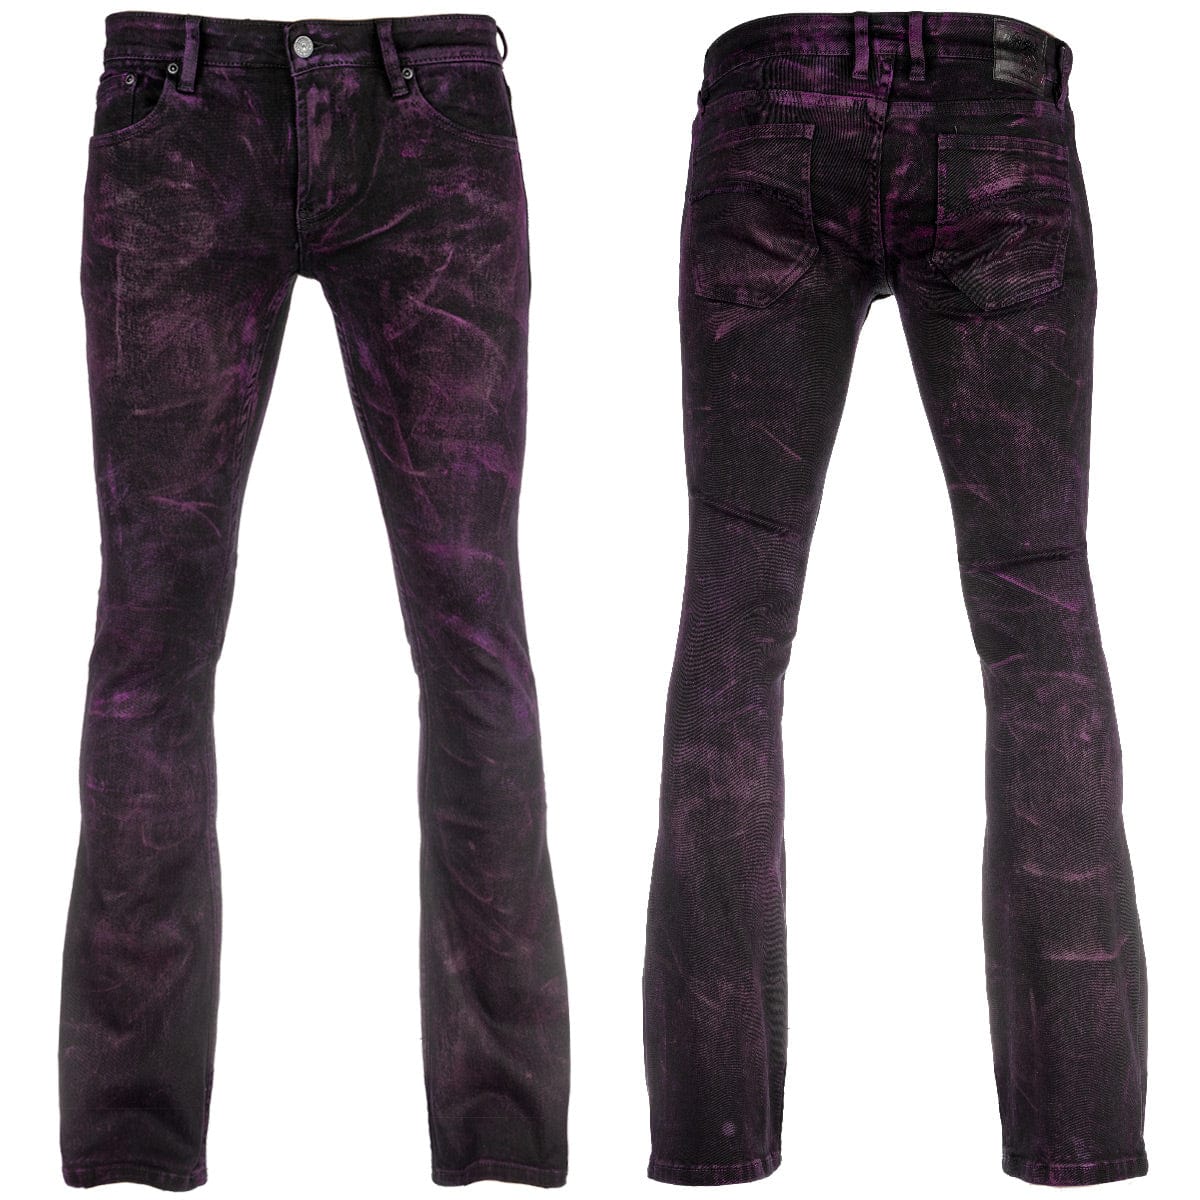 Custom Chop Shop Pants Copy of Wornstar Custom Jeans - Purple Haze Alloy Washed